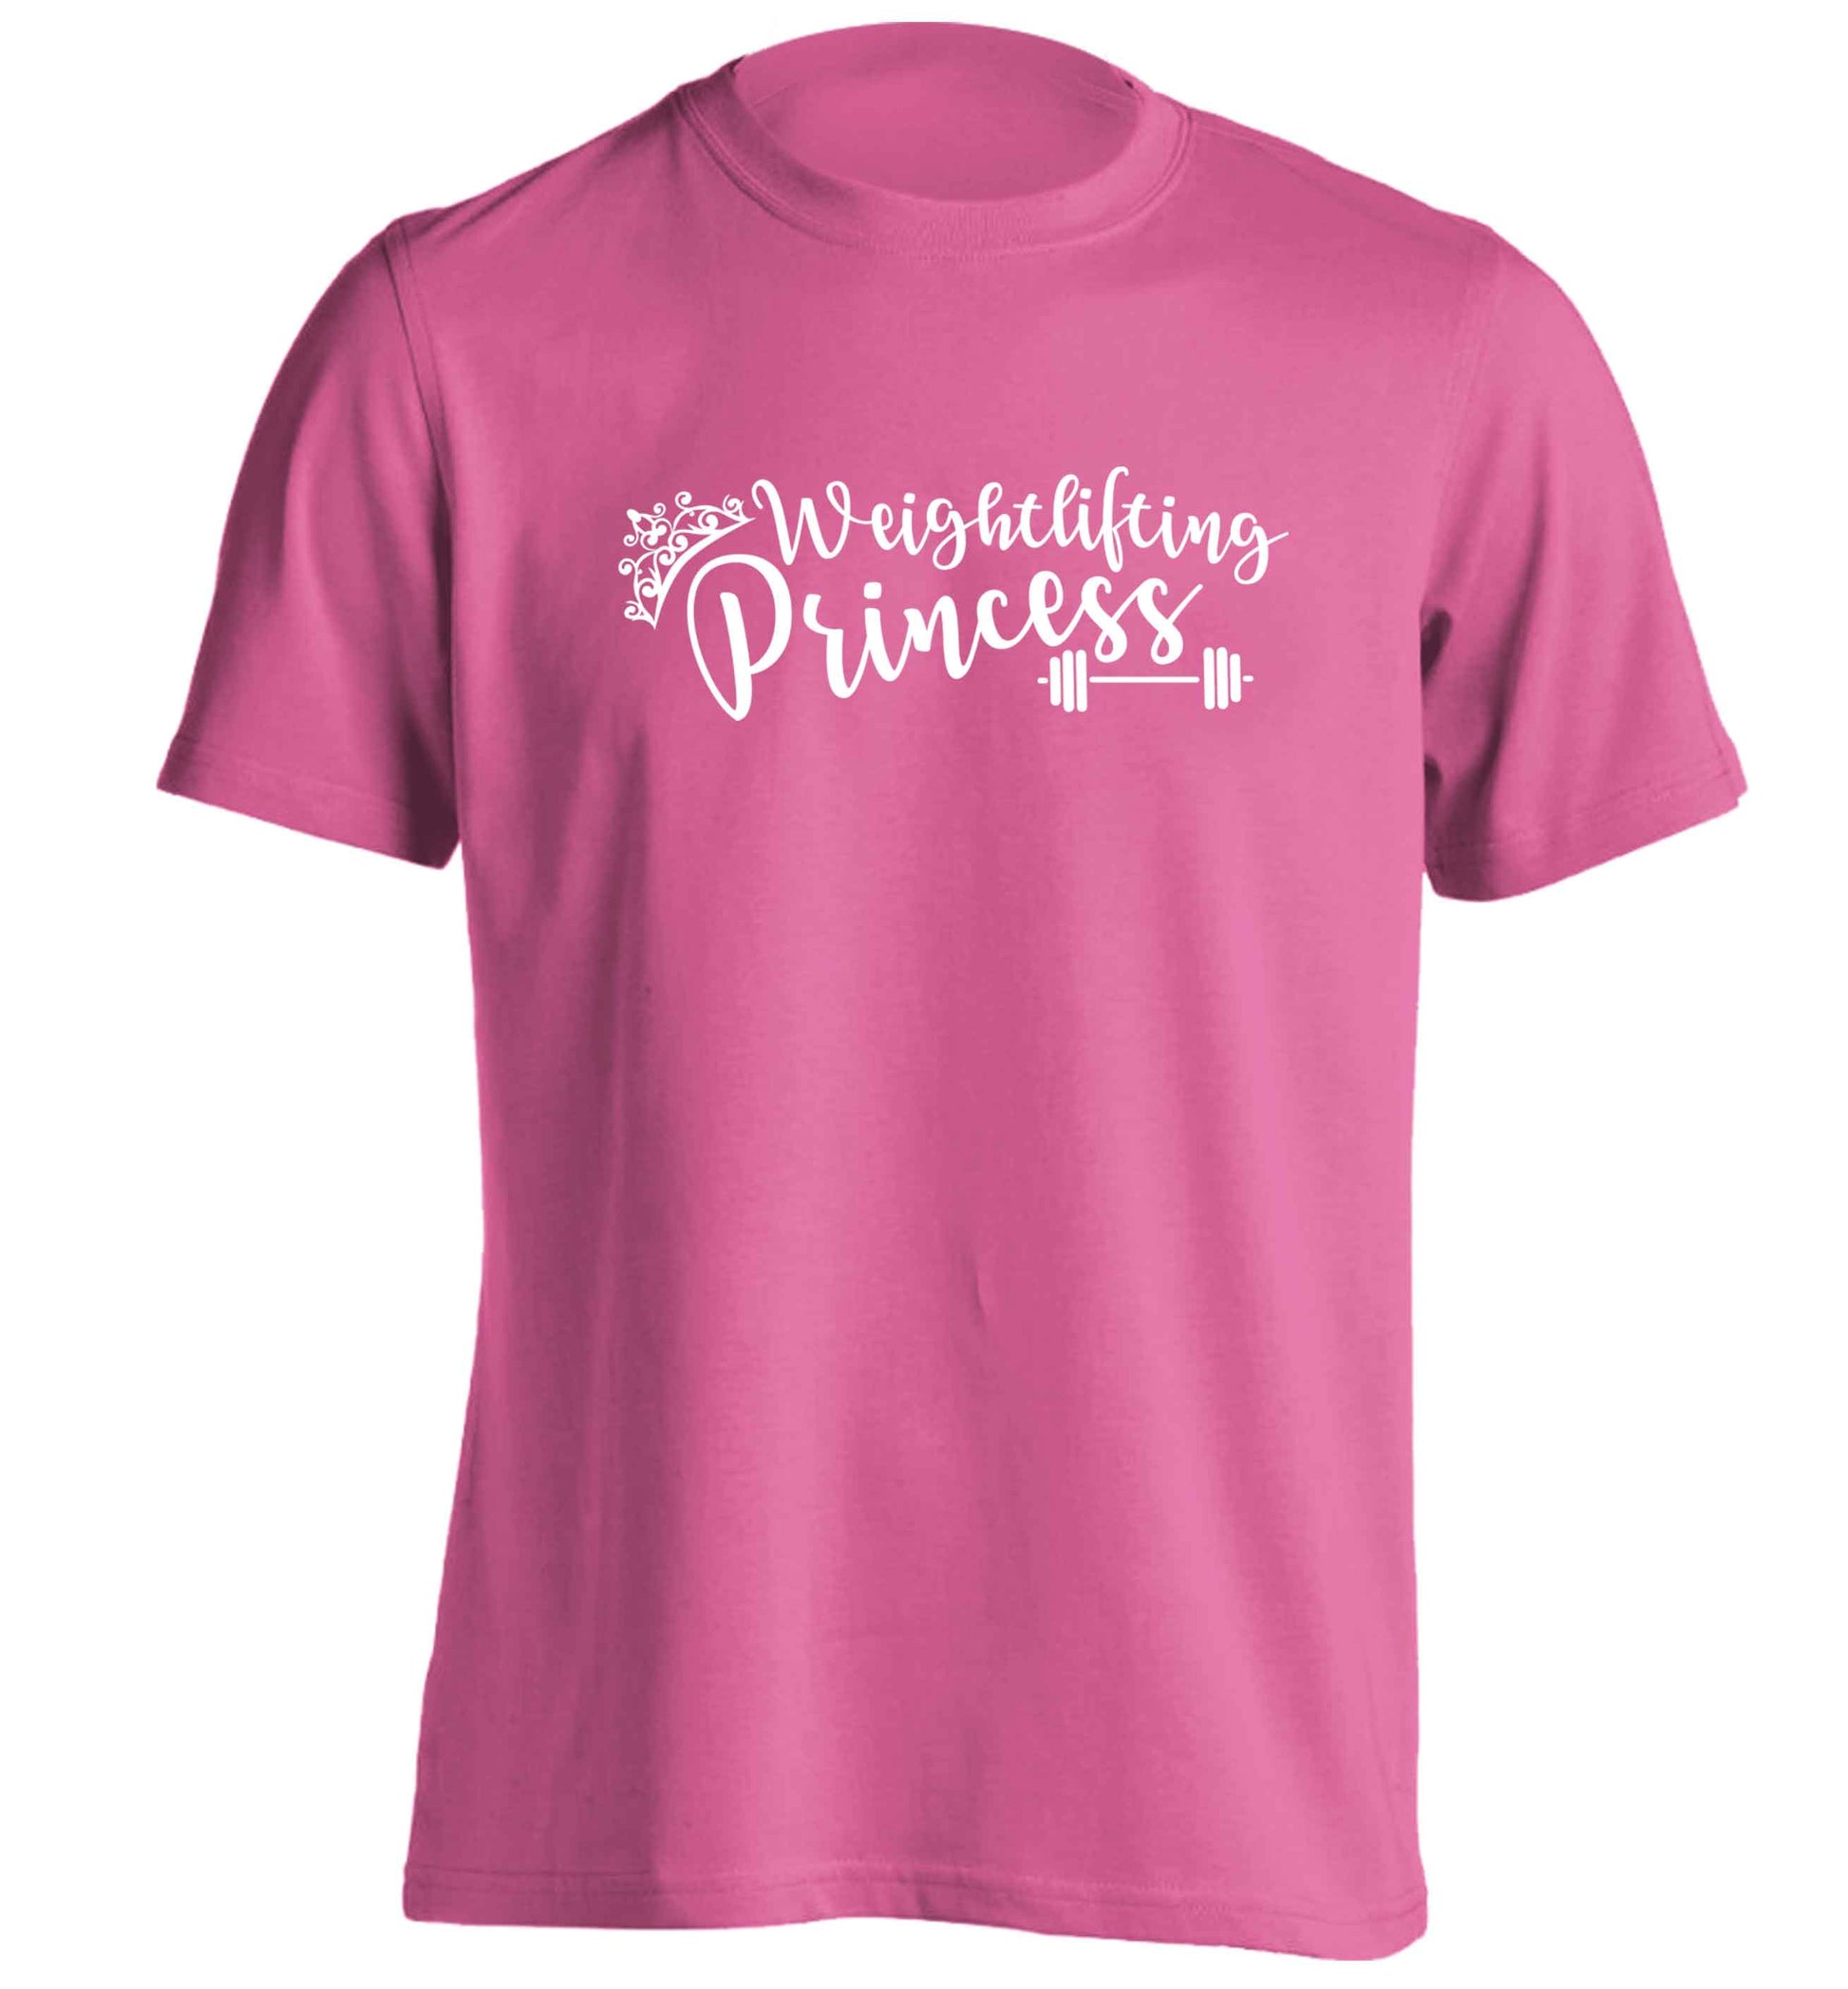 Weightlifting princess adults unisex pink Tshirt 2XL